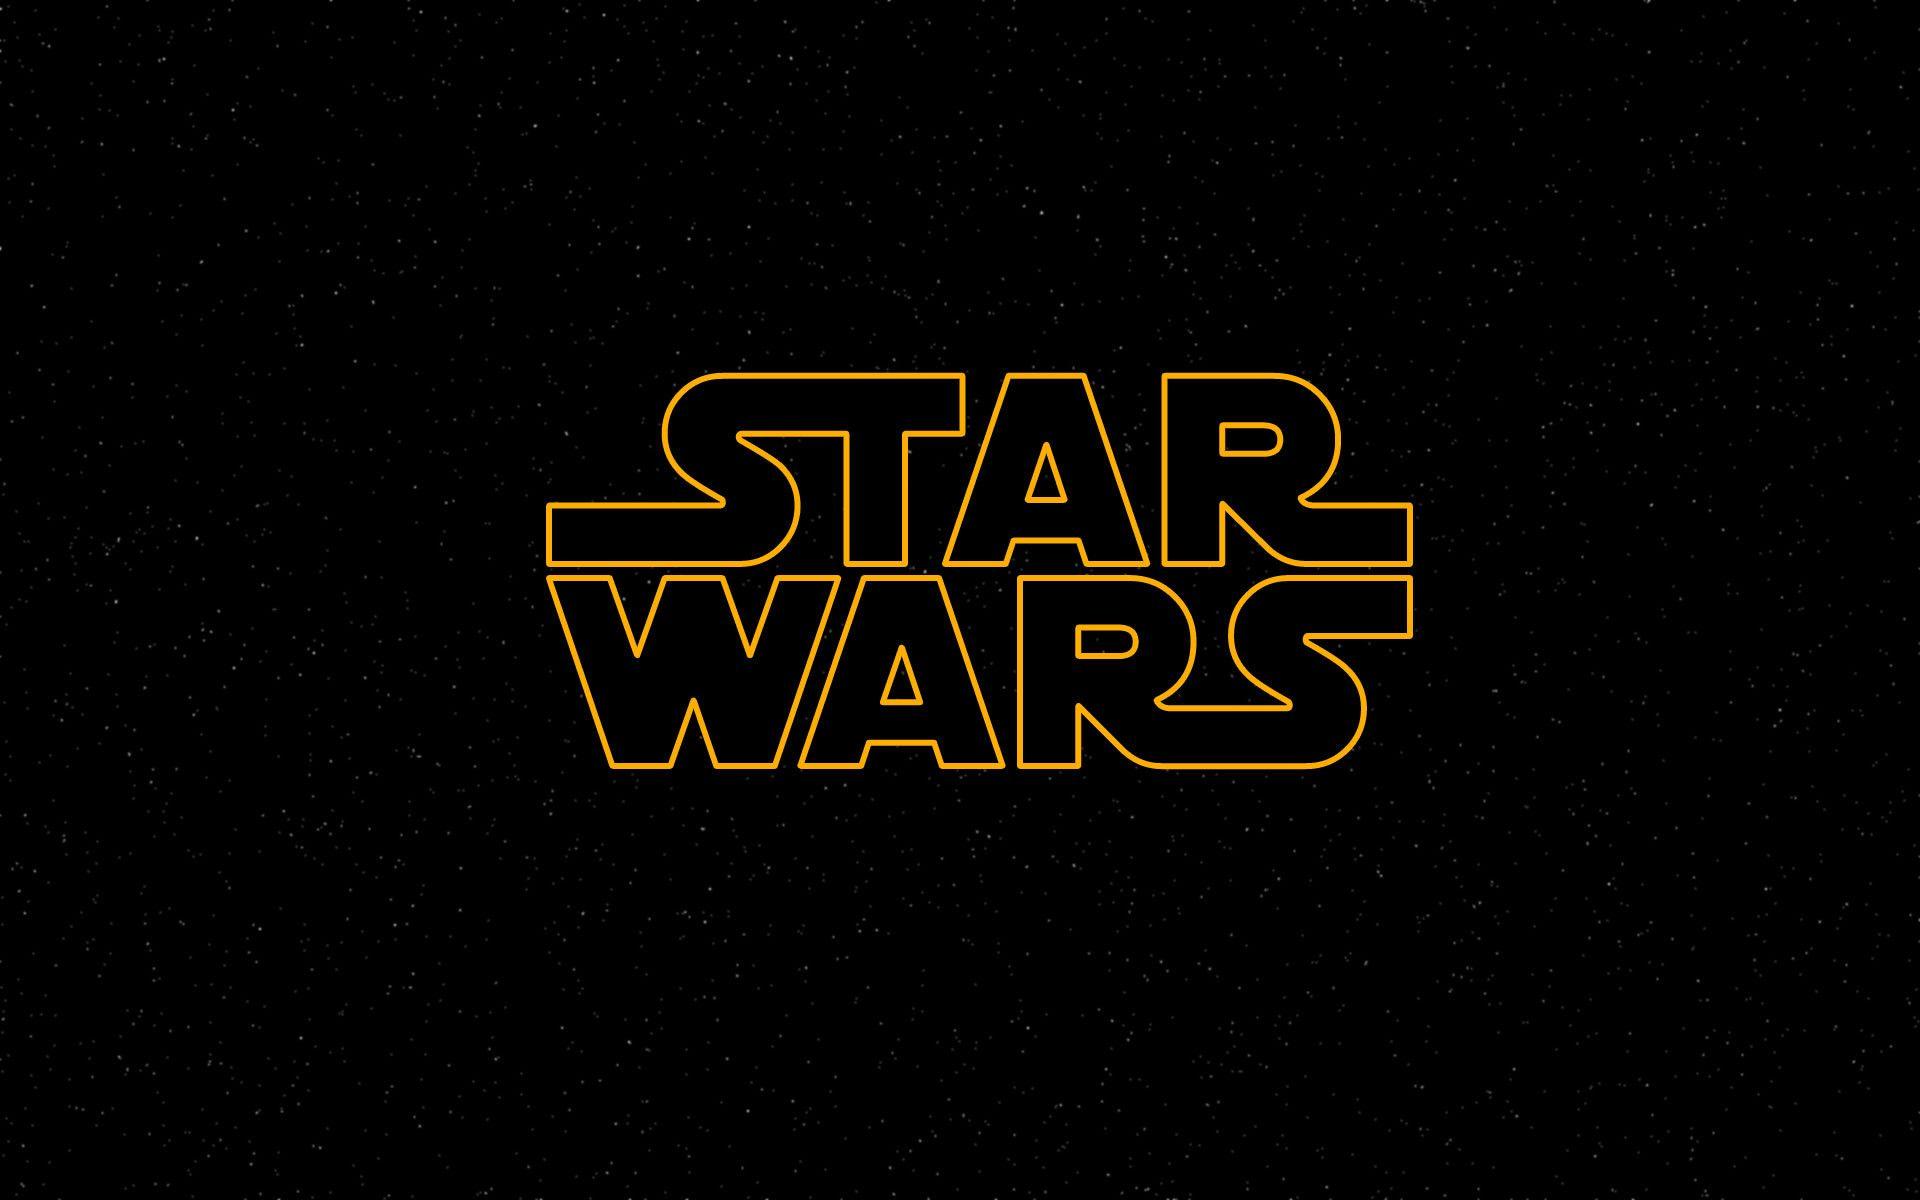 Star wars logo black background